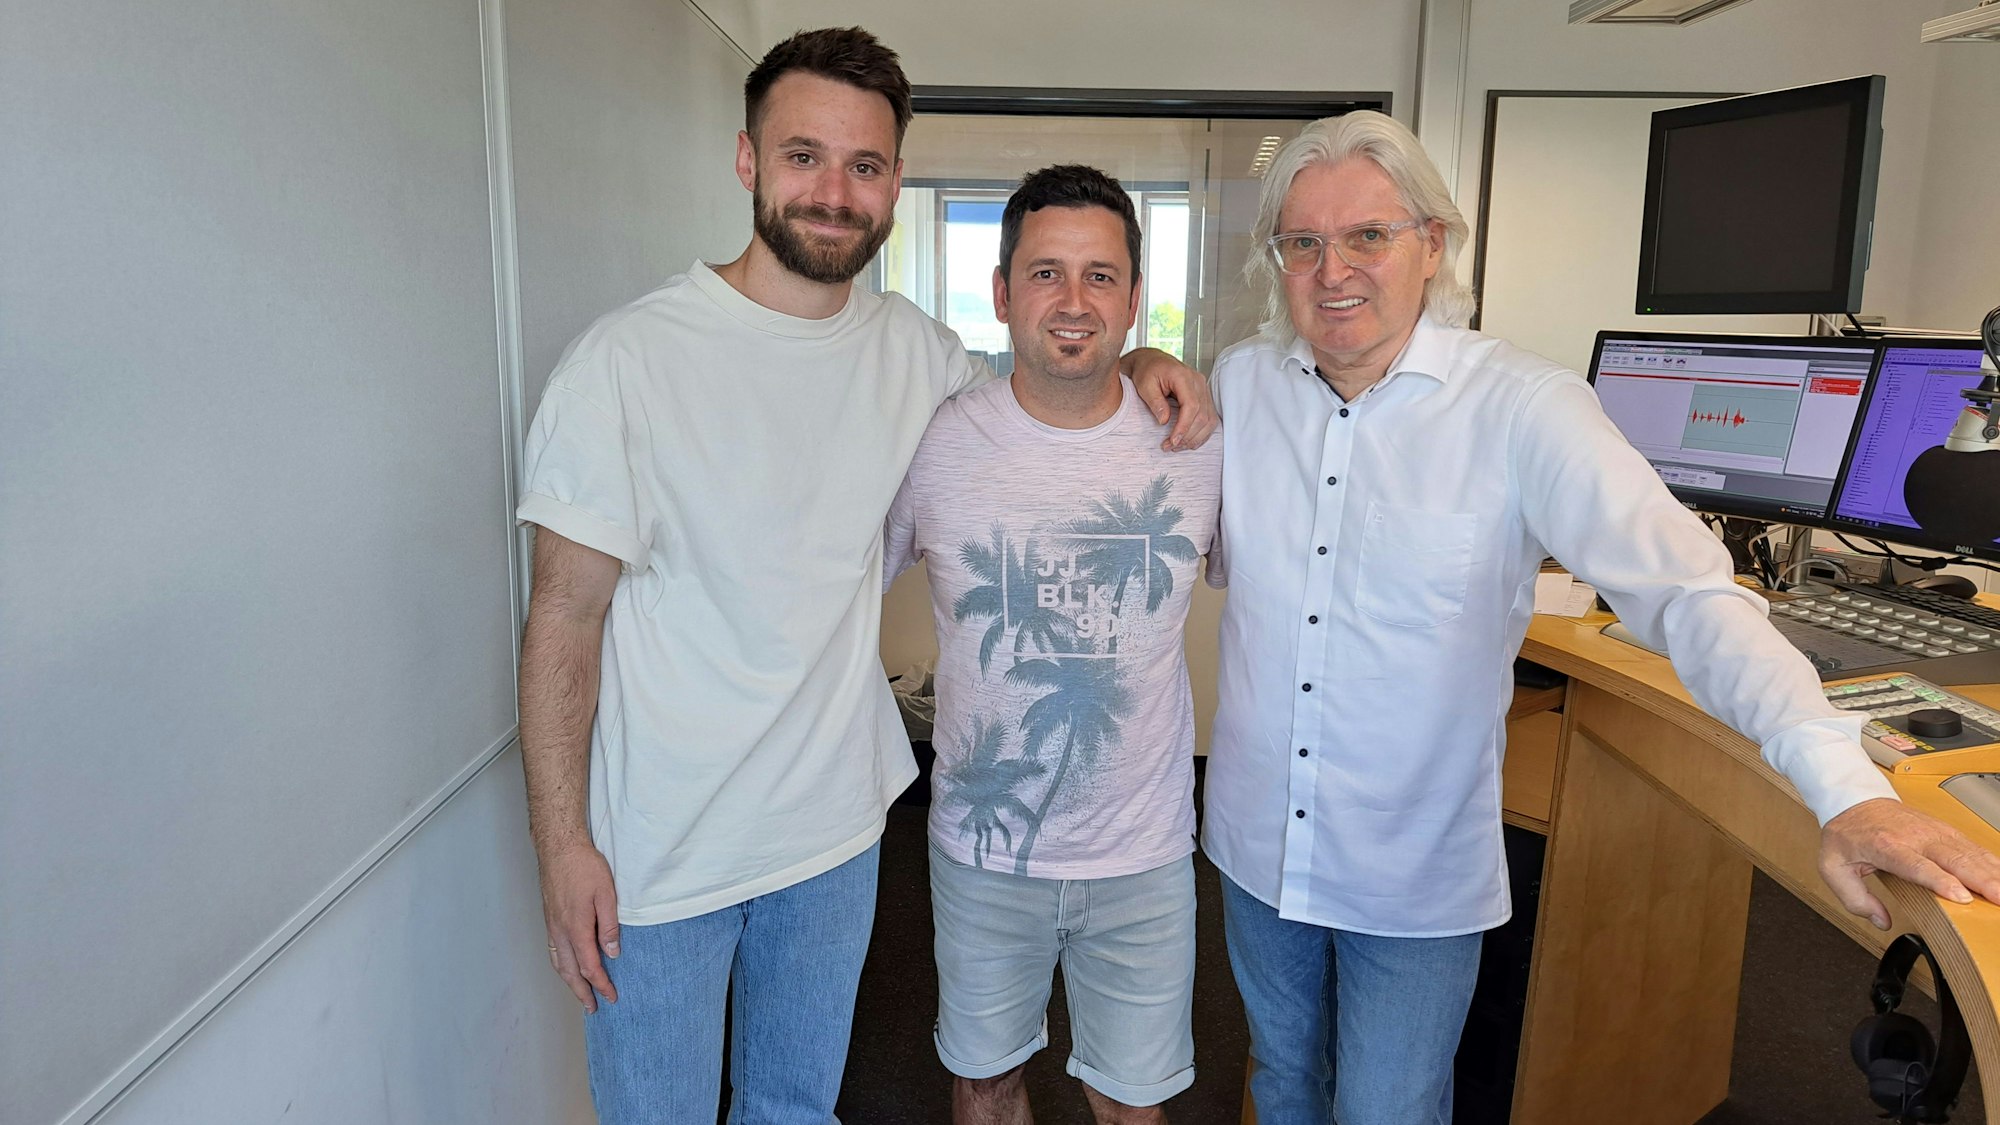 Roman Lob, Dominik Becker und Jürgen Hoppe bei der Aufnahme zum Podcast „Kölsch & Jot“